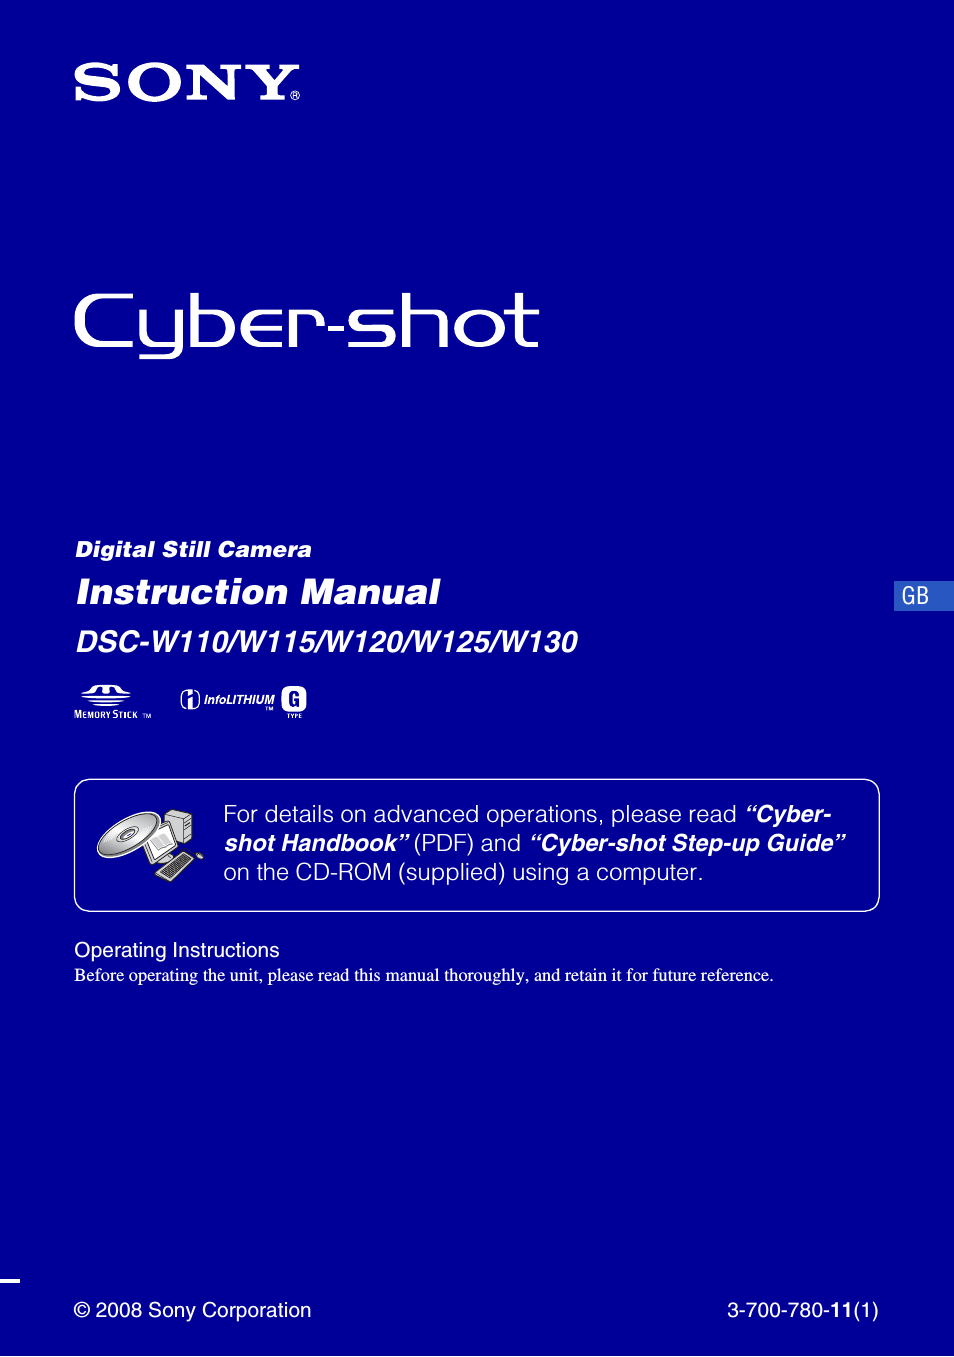 Cyber-shot W125 (Page 1)